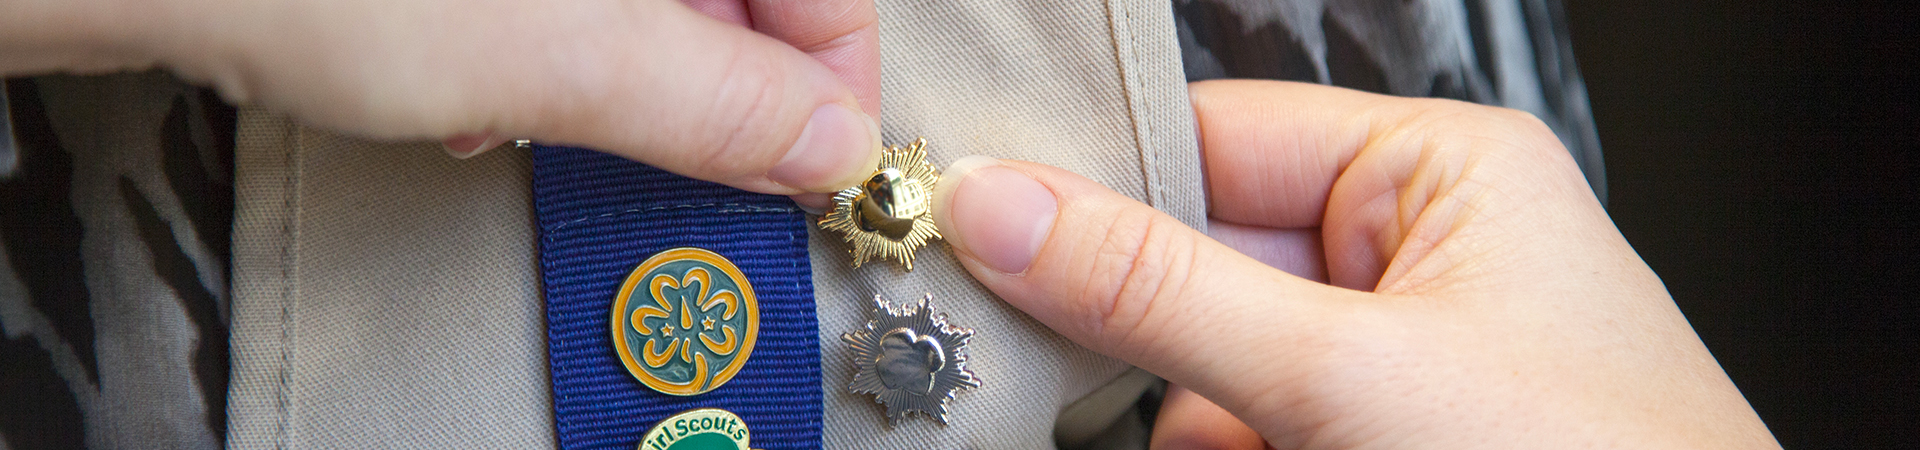  Girl Scout Gold Award Pin 